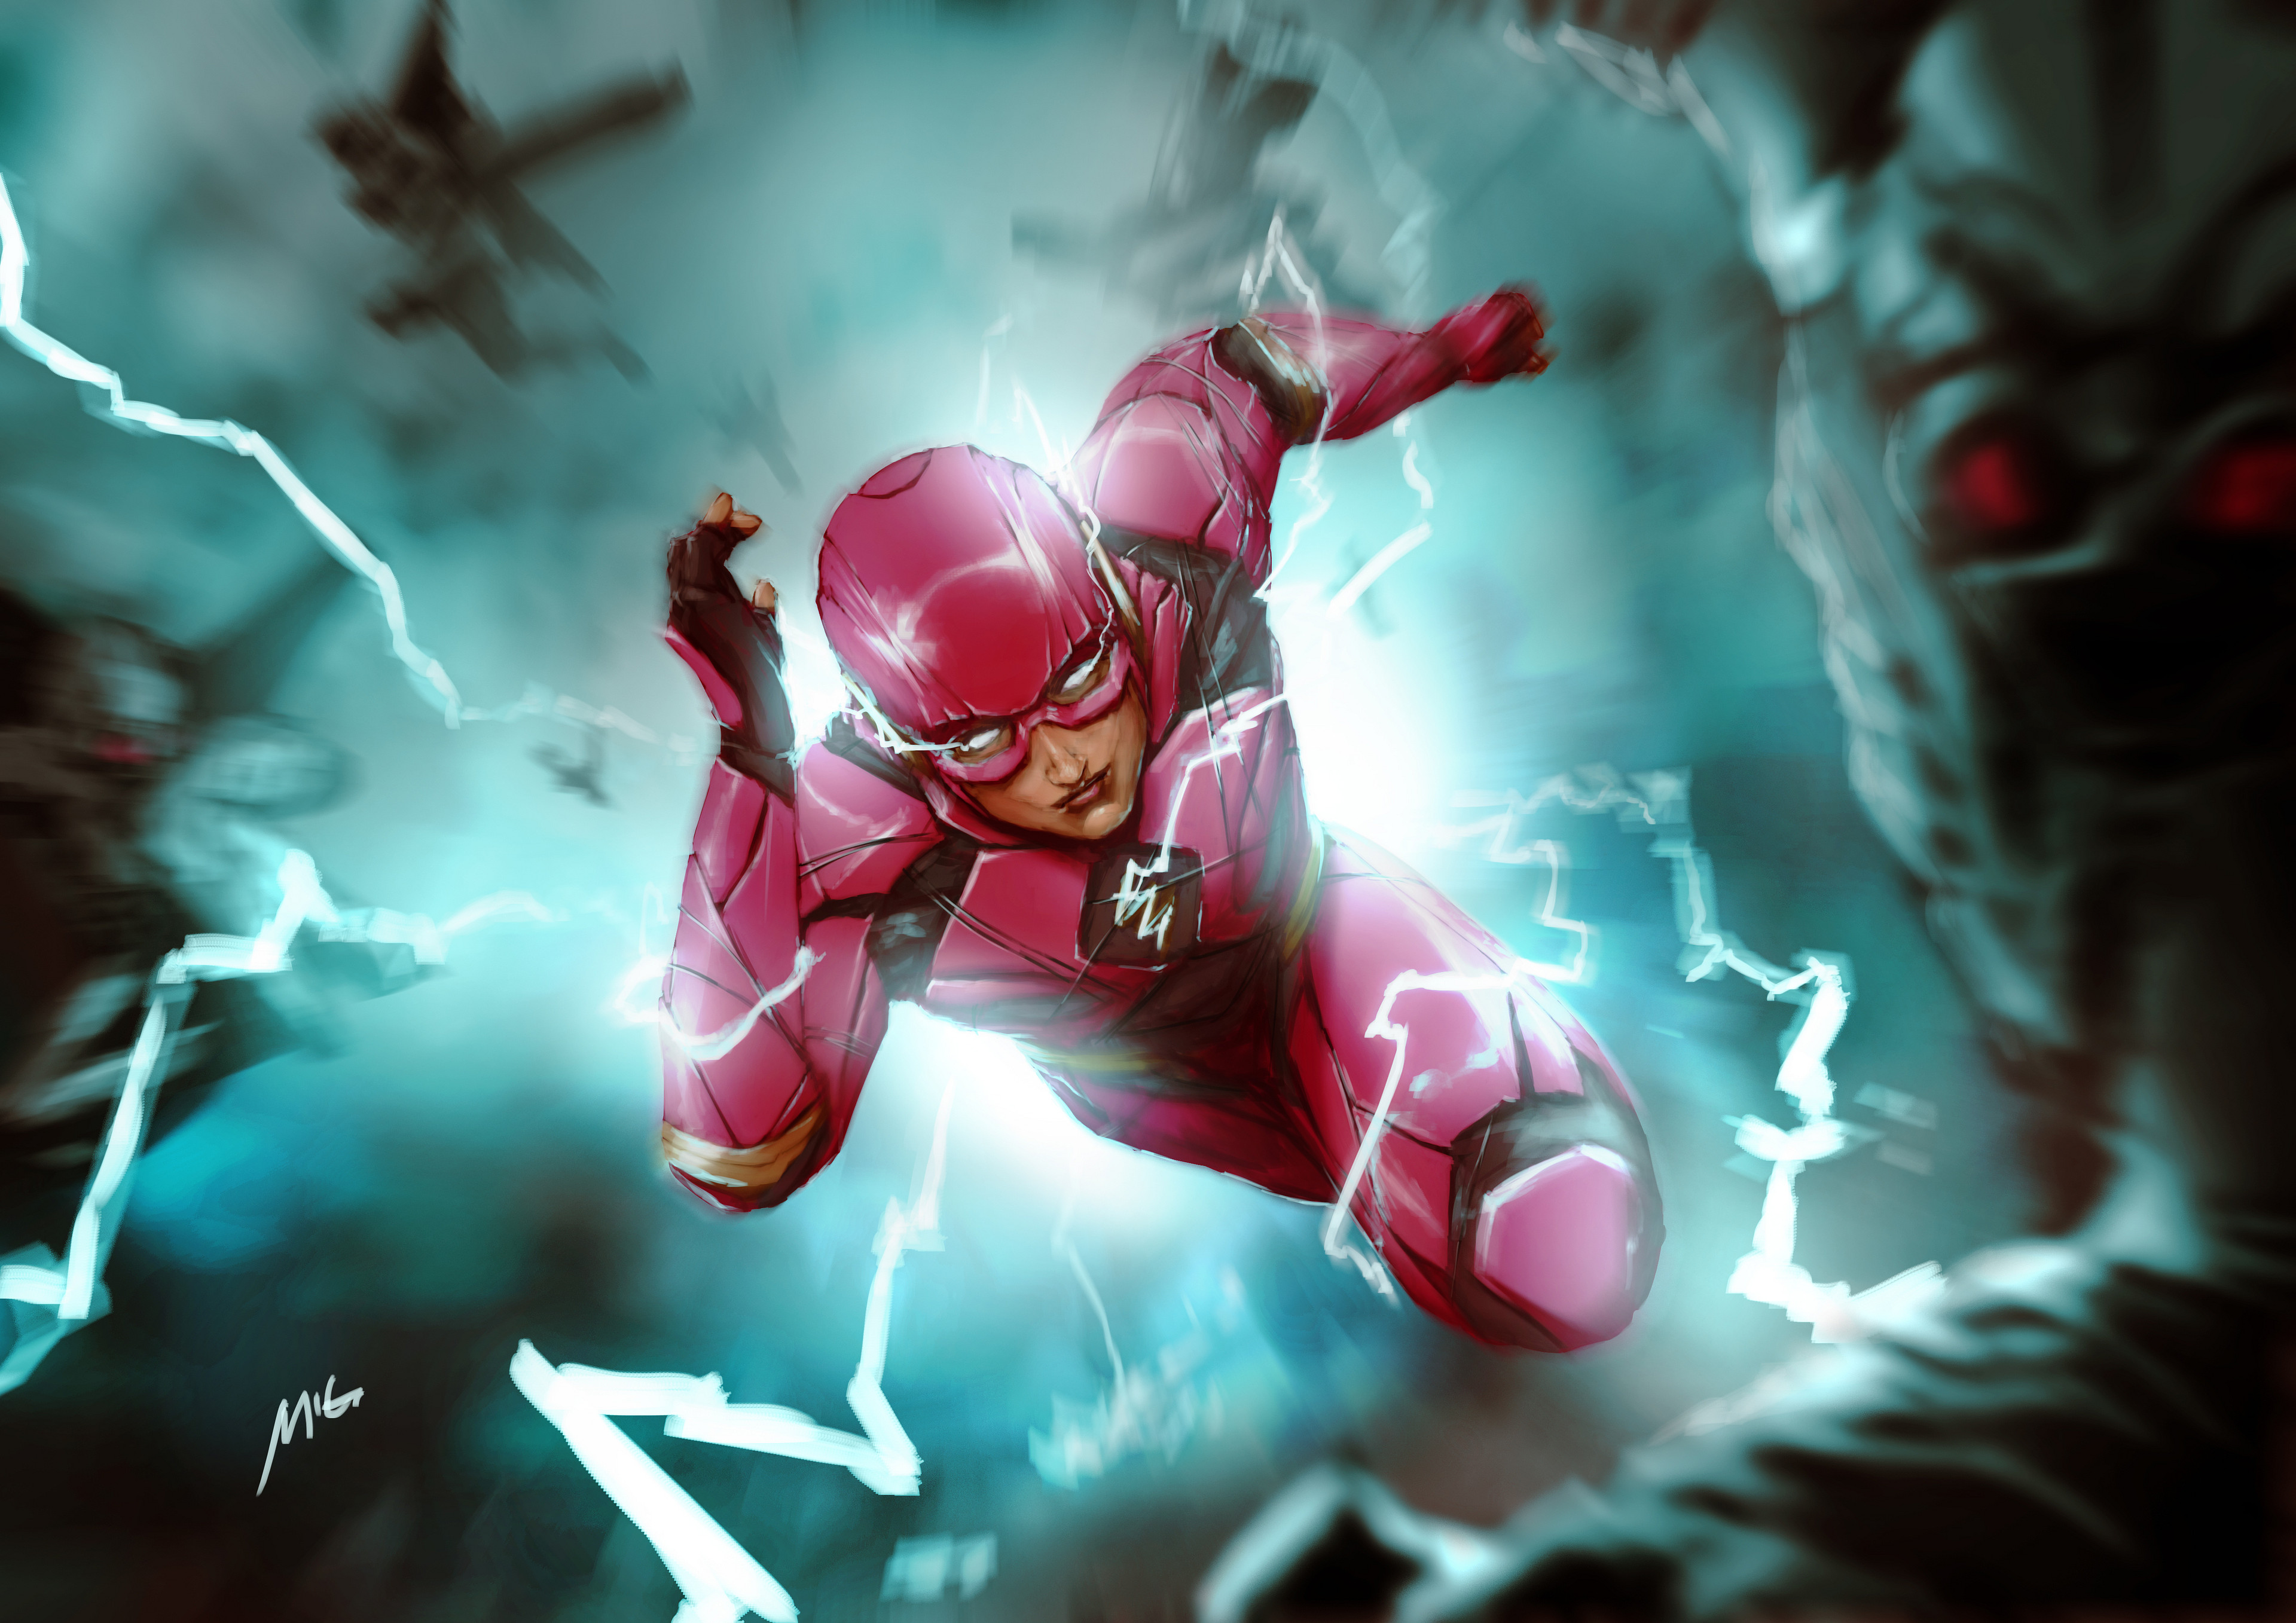 Descarga gratuita de fondo de pantalla para móvil de Historietas, Dc Comics, The Flash.